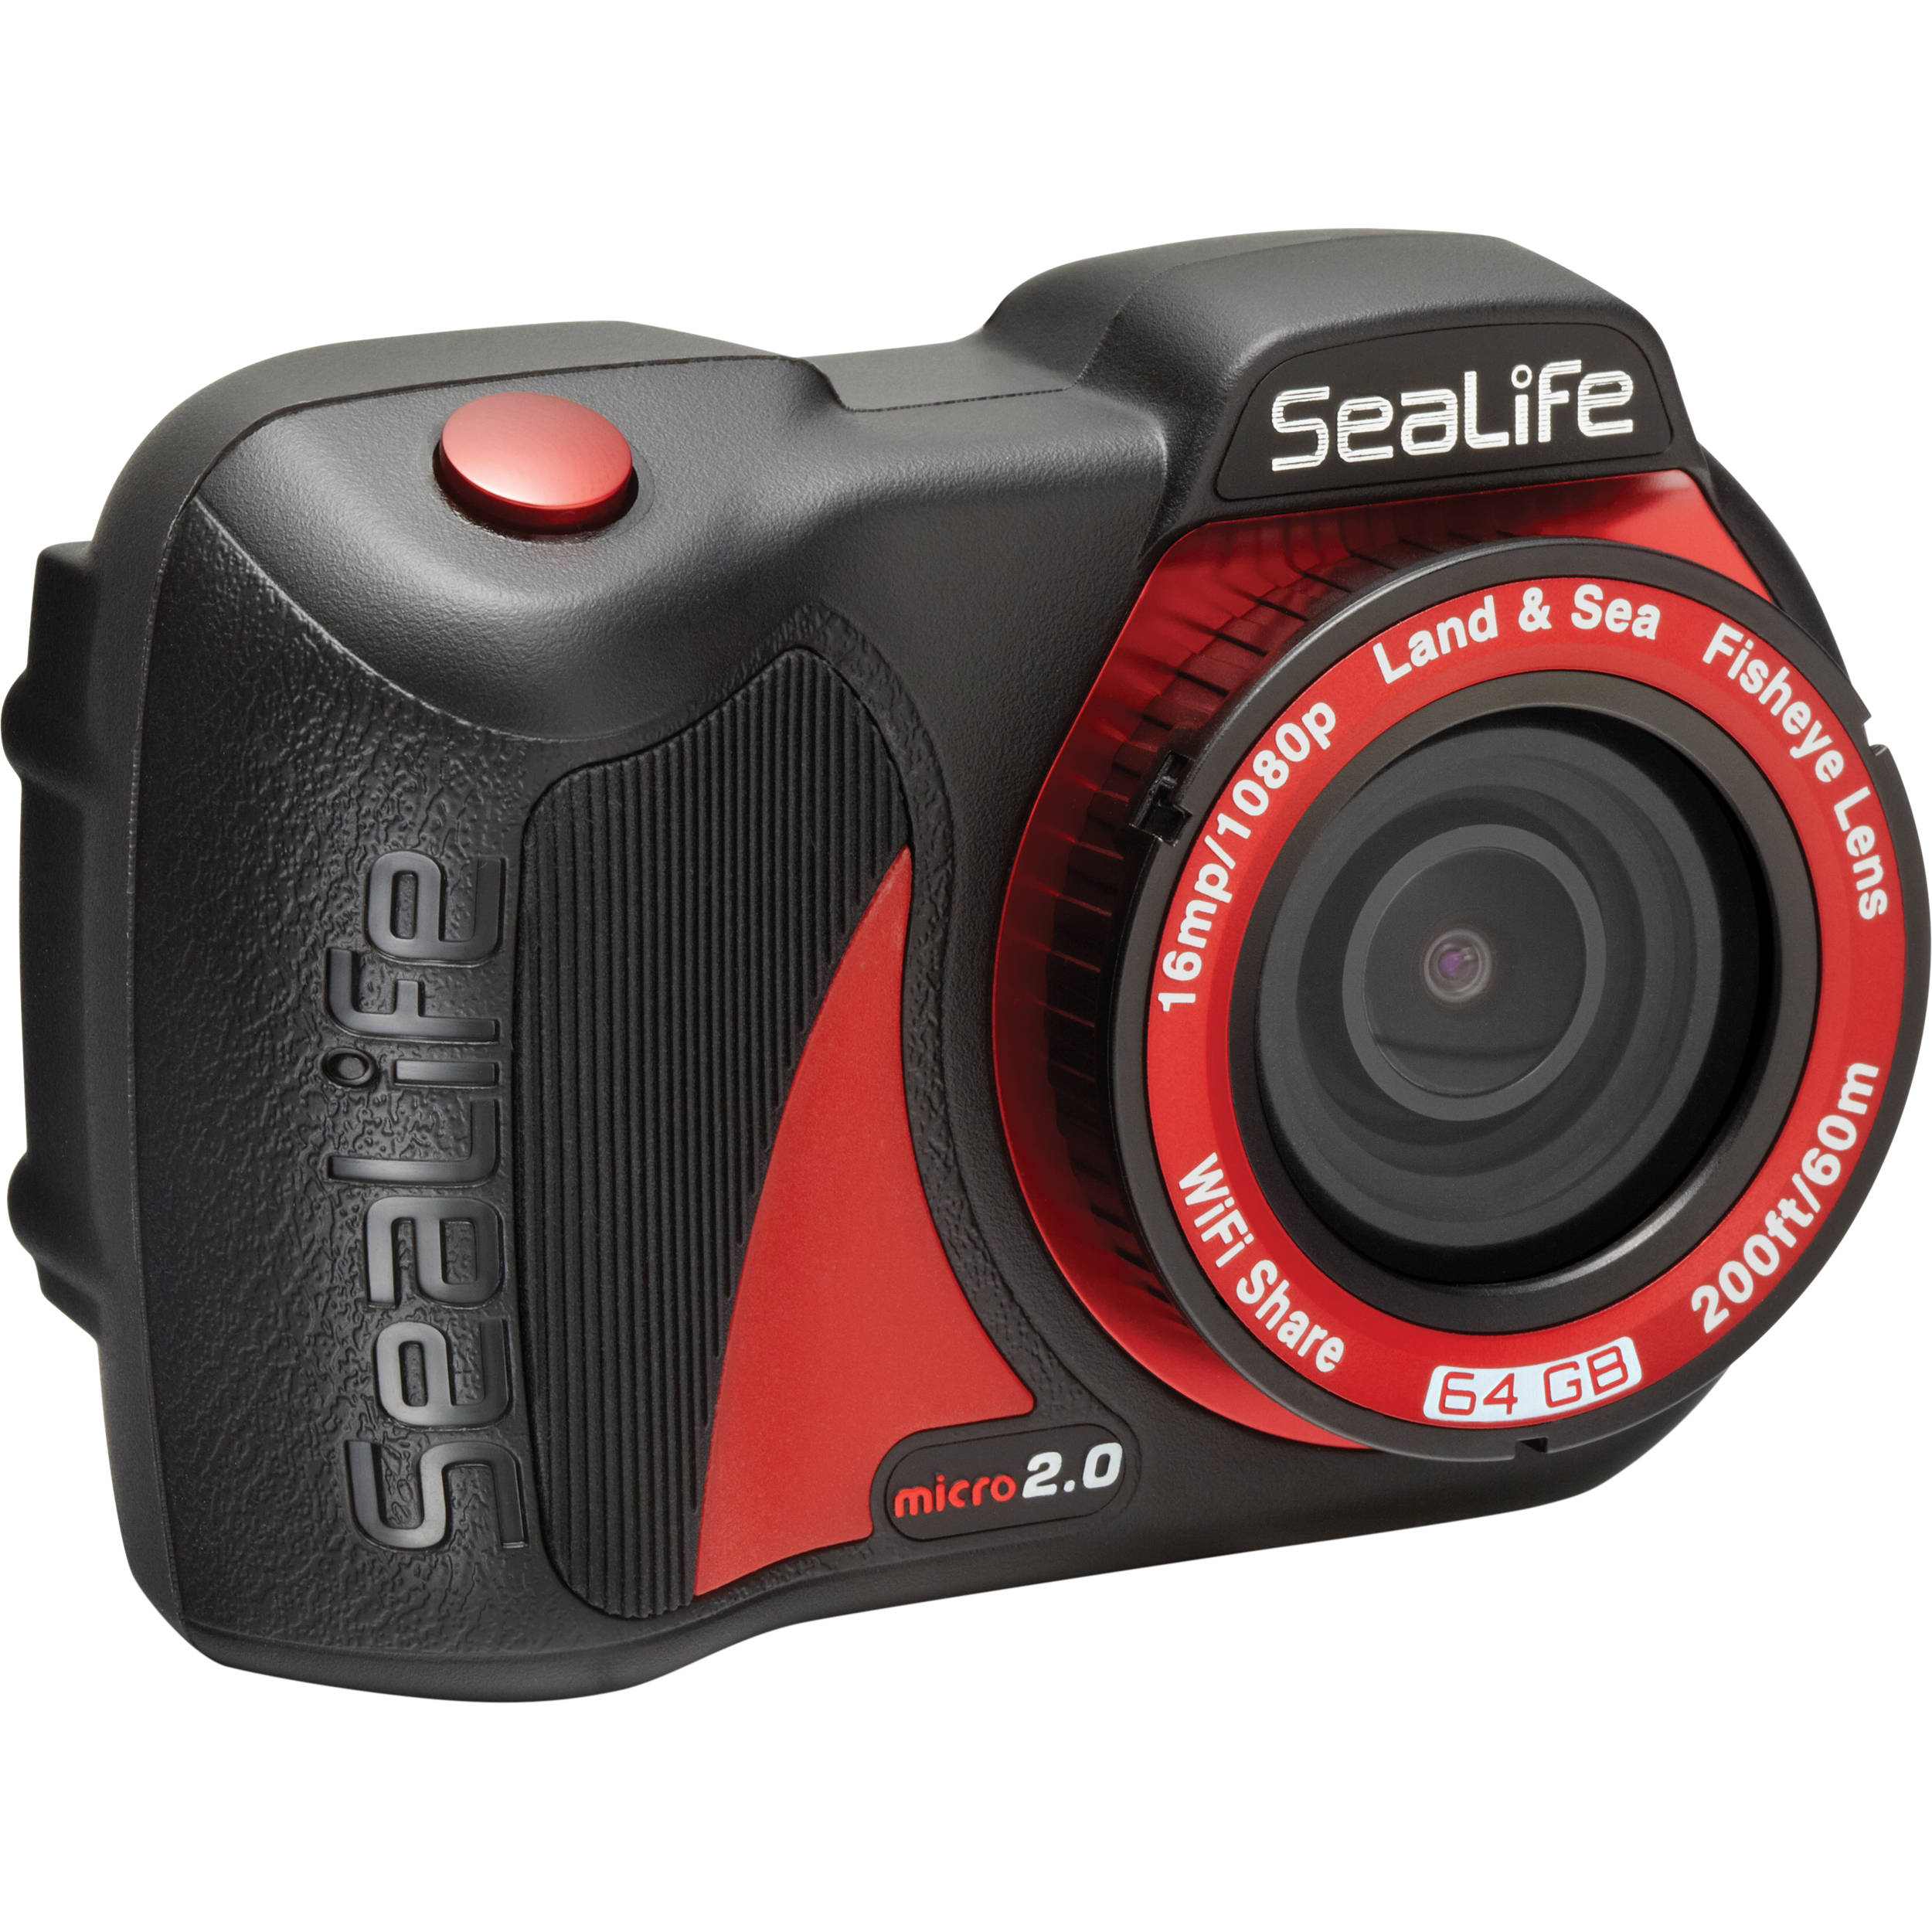 Gear Review: SeaLife Micro 2.0 underwater camera